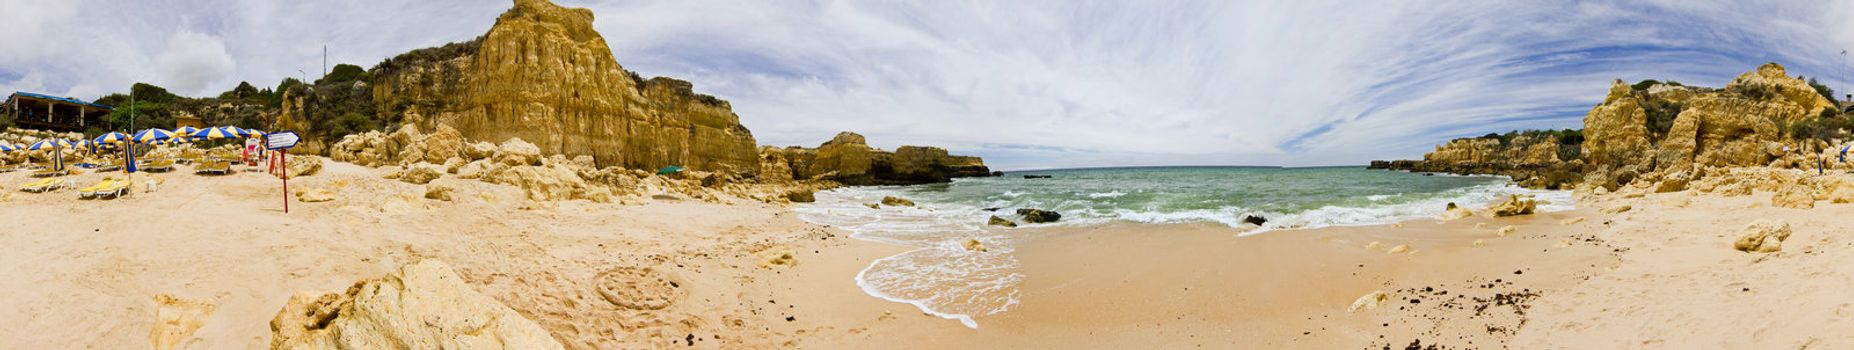 View of the beautiful coastline near Albufeira in the Algarve, Portugal.